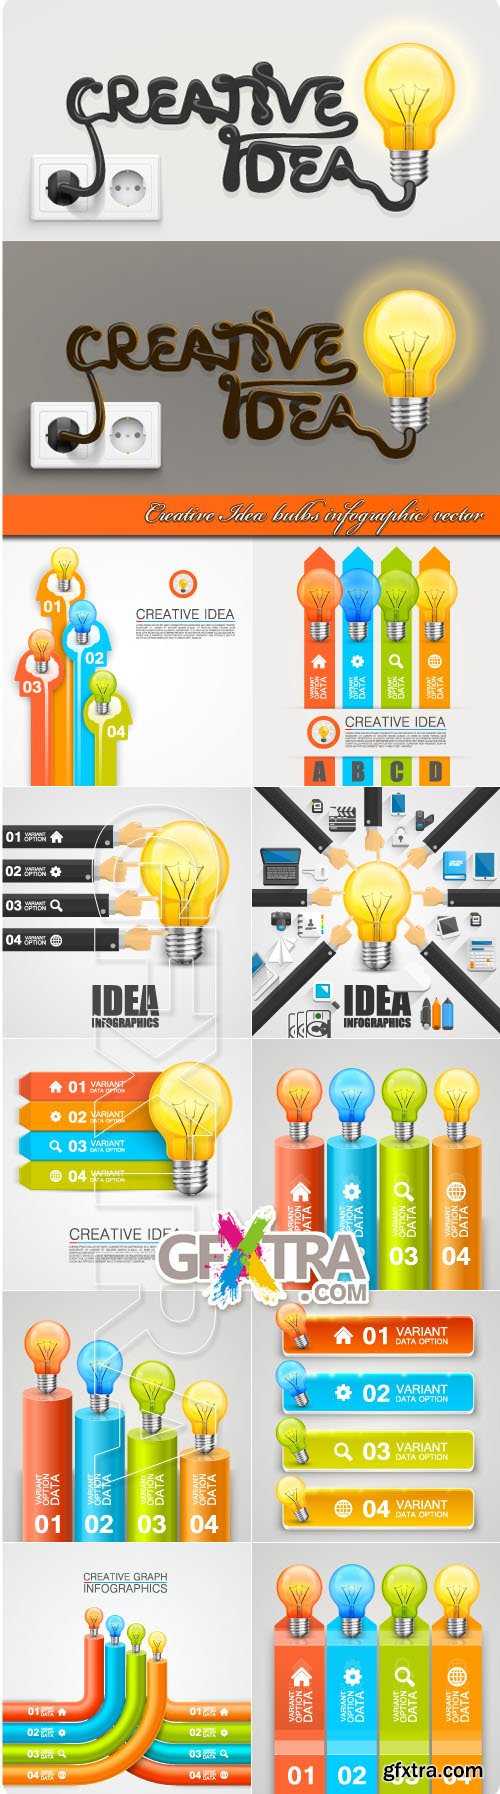 Creative Idea bulbs infographic vector